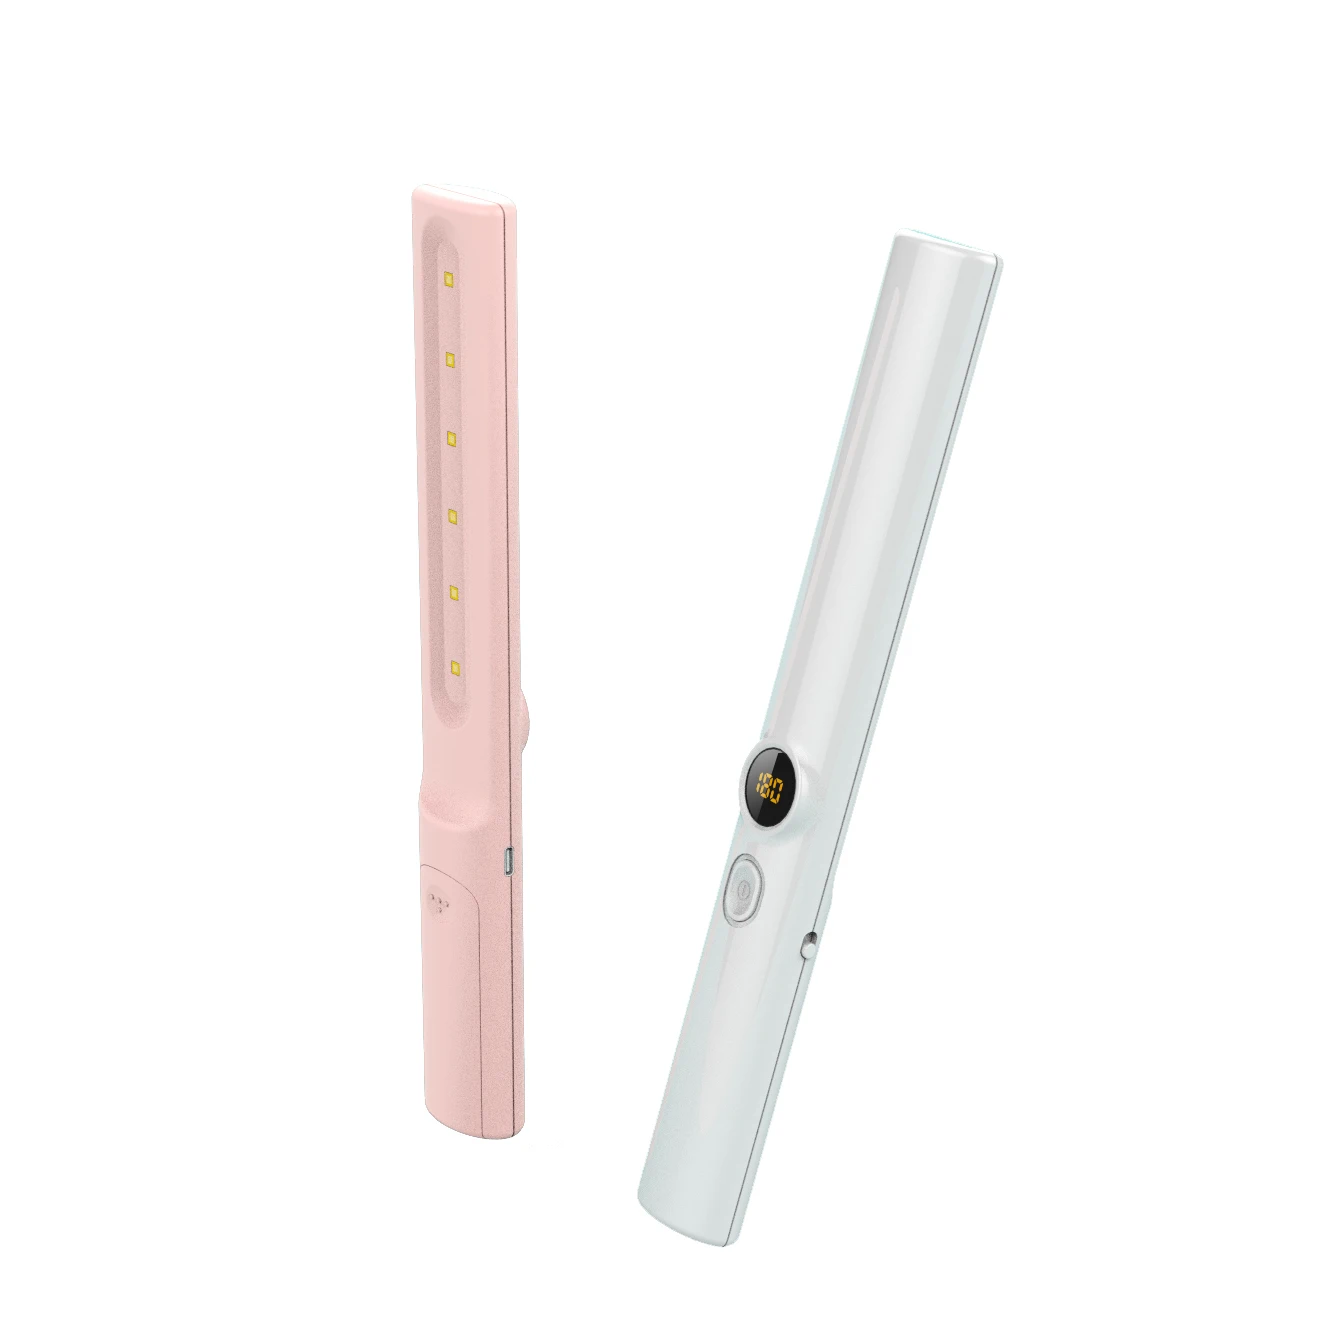 Amazon eBay Wish hot Handheld Rechargeable uv light germicidal lamp portable uv sanitizer wand